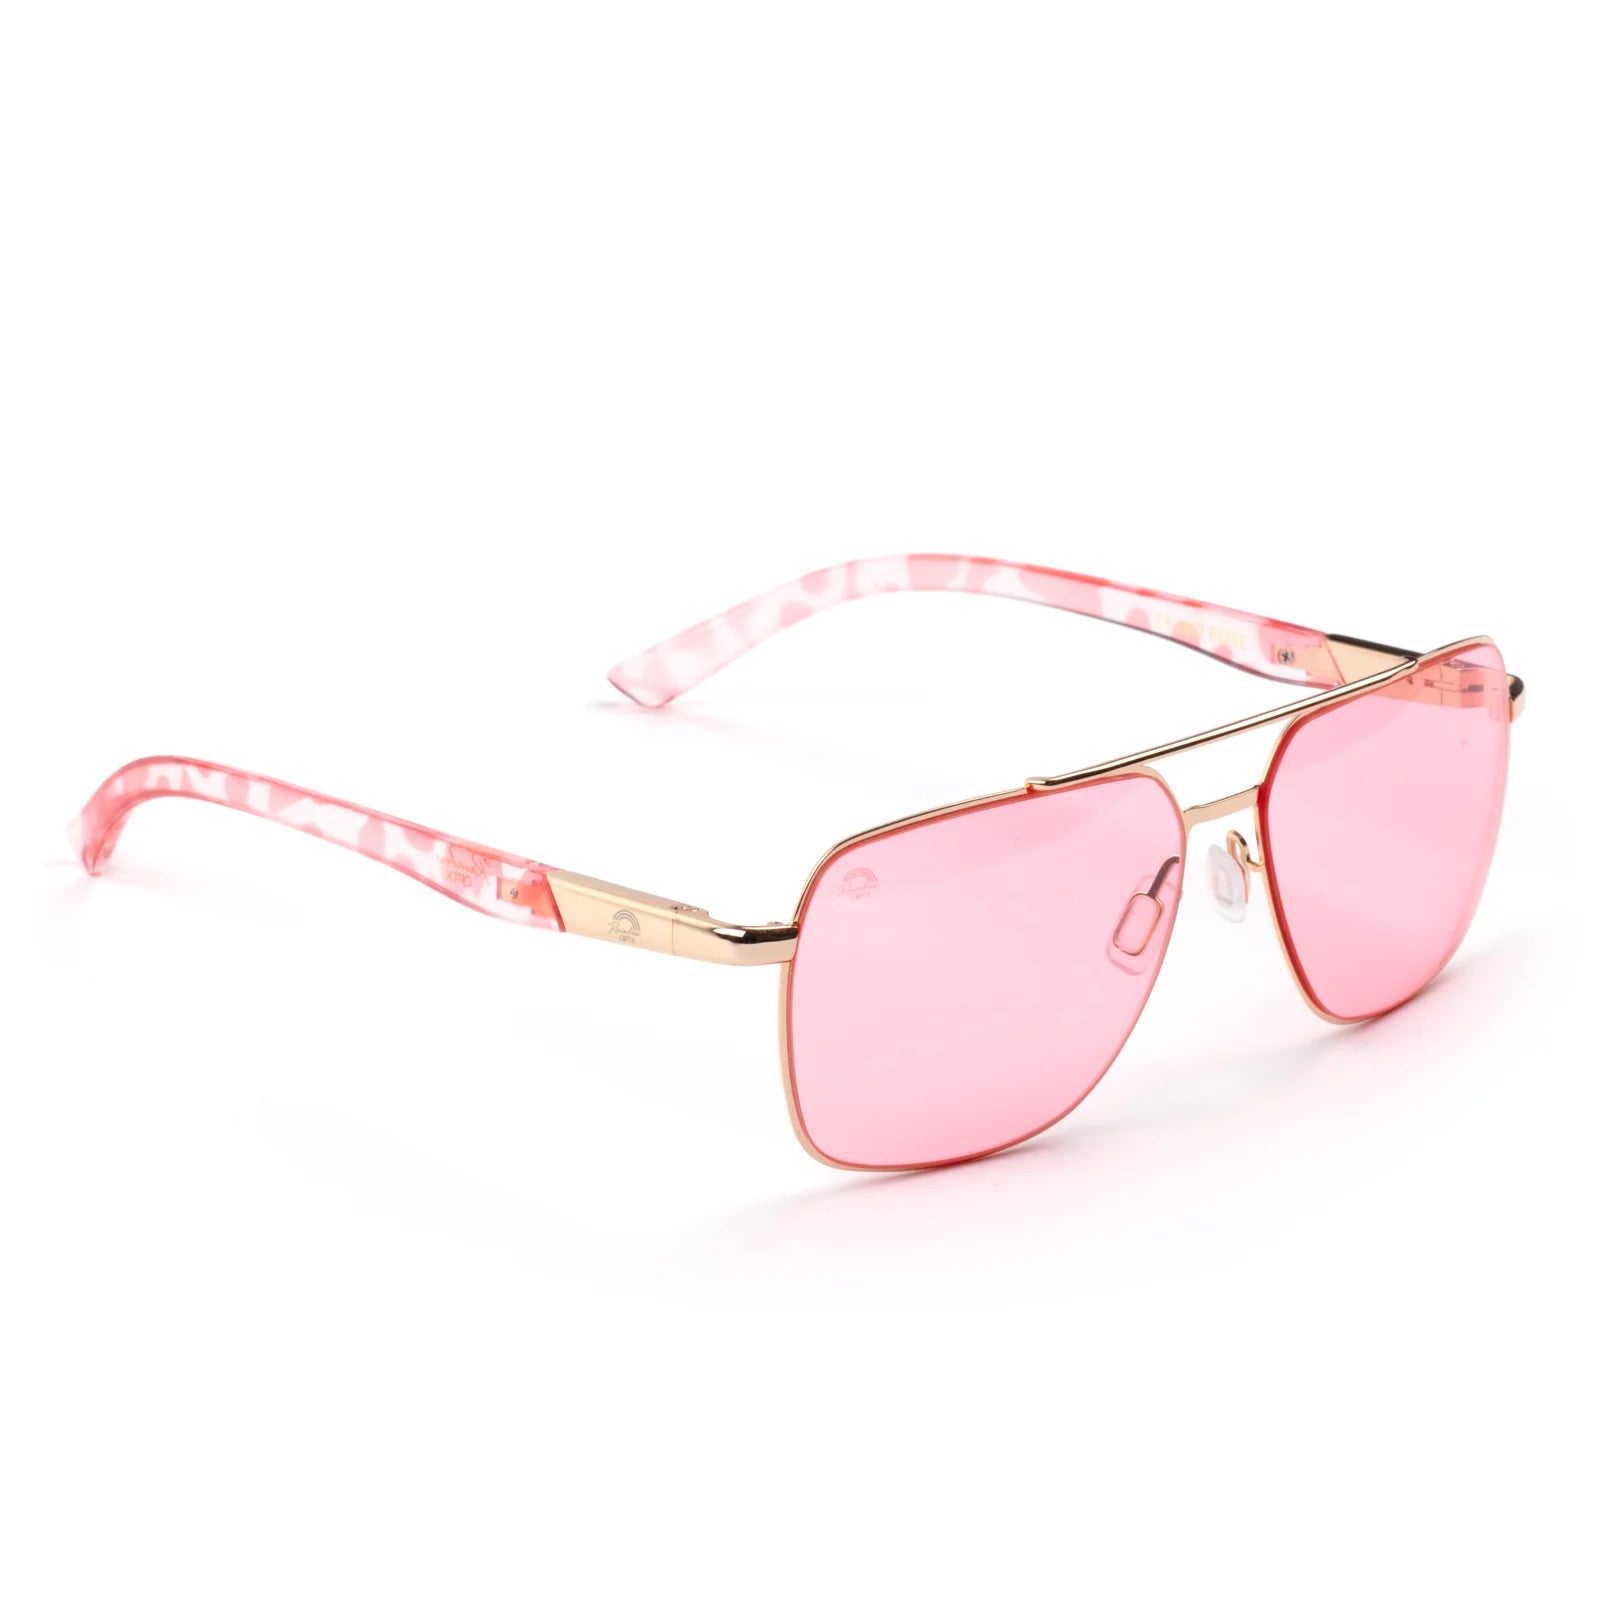 RainbowOPTX Sunglasses Leo - Rose-Accessories-Rainbow Optx-Faire-The Twisted Chandelier